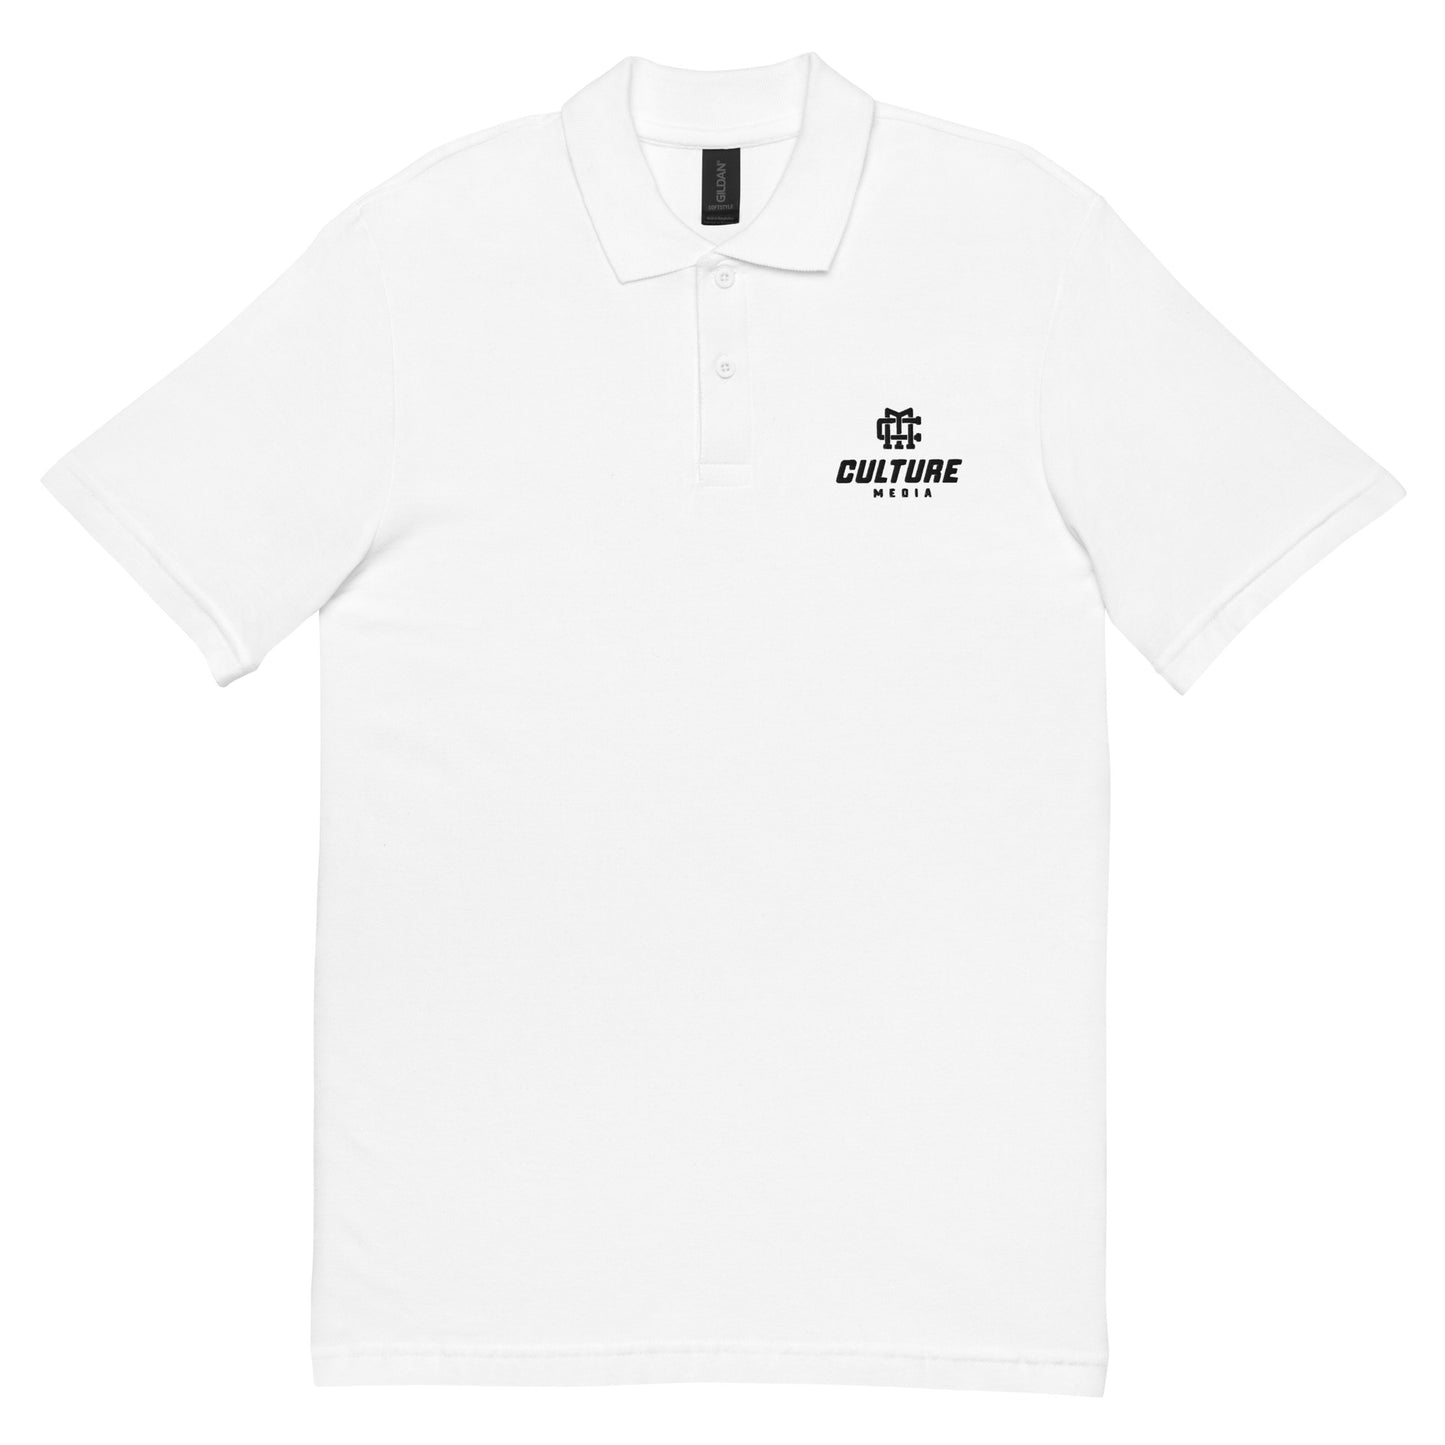 Culture Media polo shirt (White)